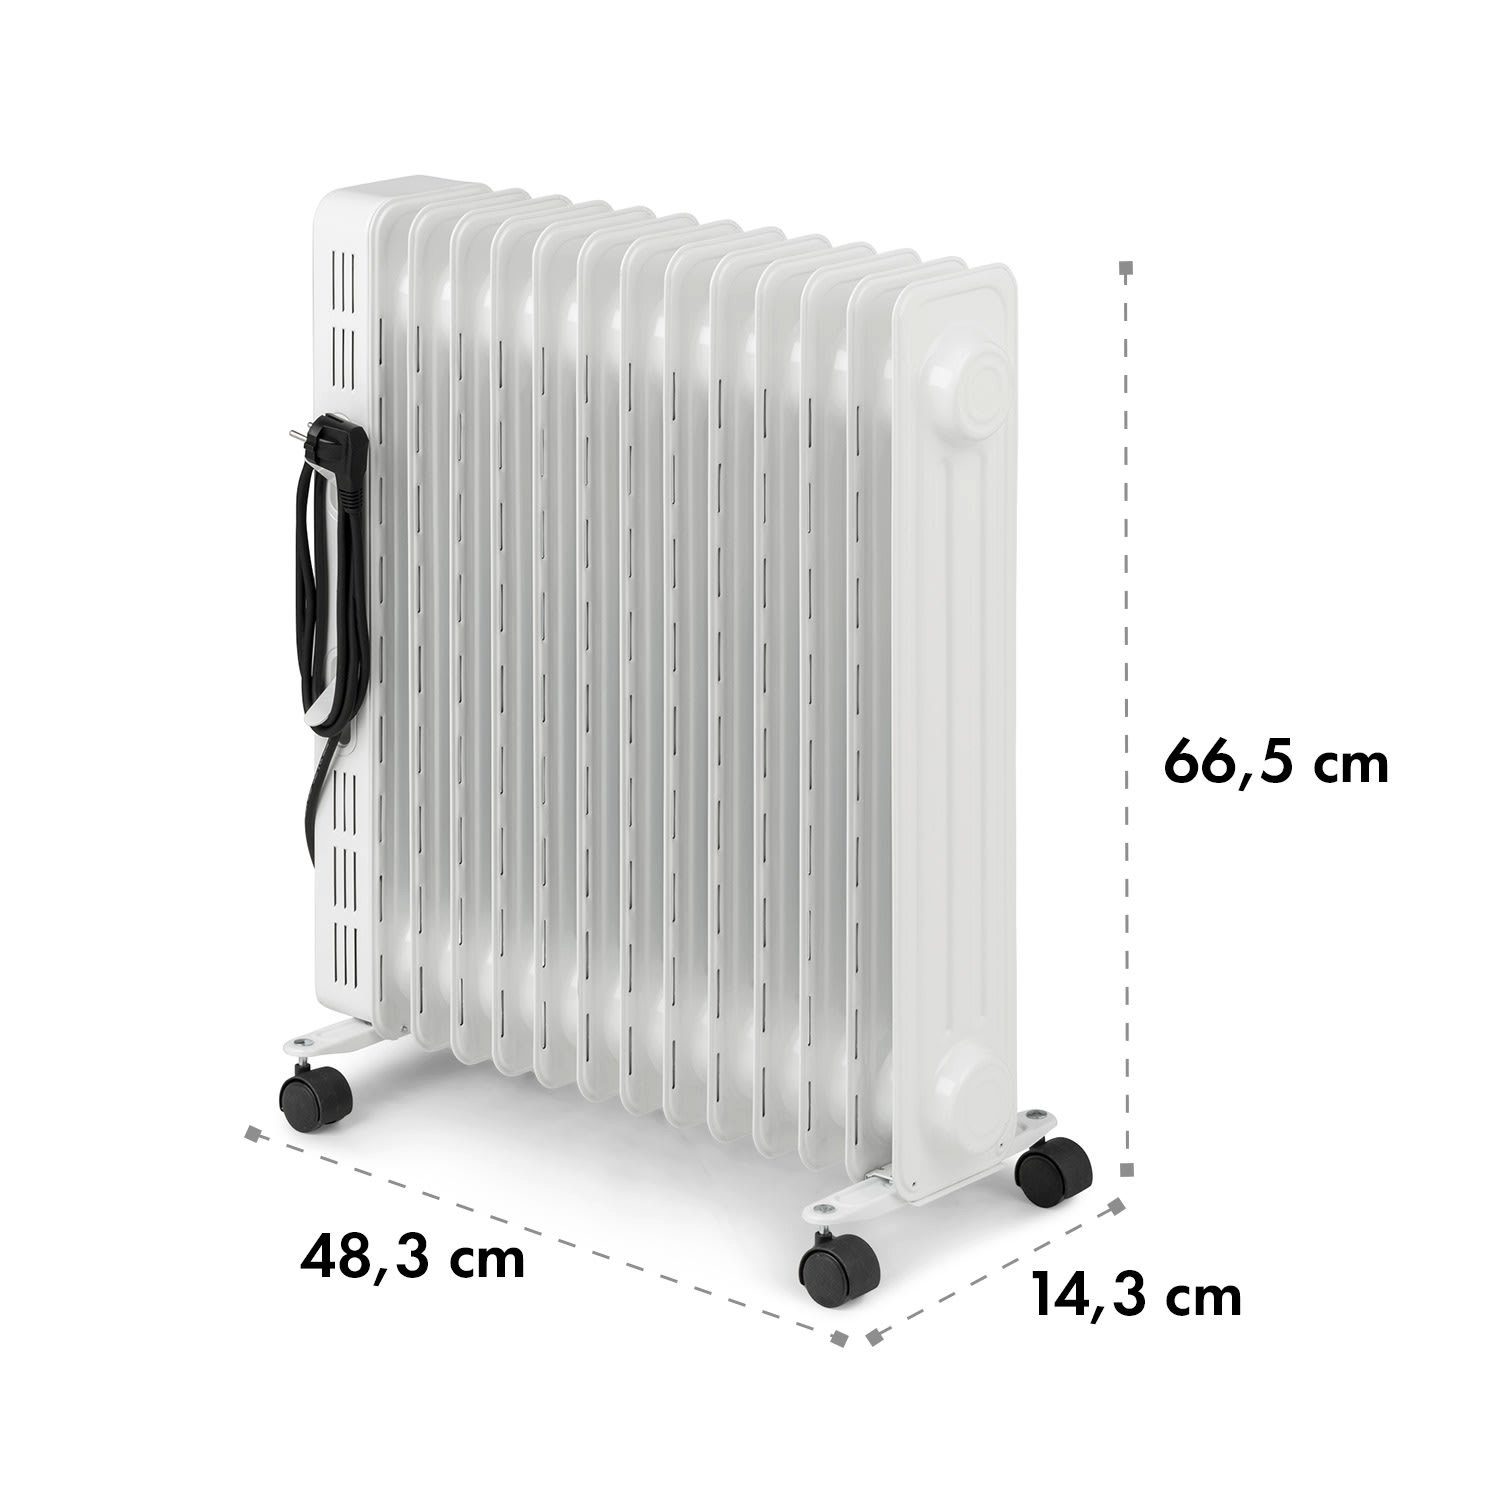 Klarstein Rippen Thermostat 12 Heizstrahler Ölradiator Heizkörper W, 2500 Heatstream, Thermaxx Rollen energiesparend